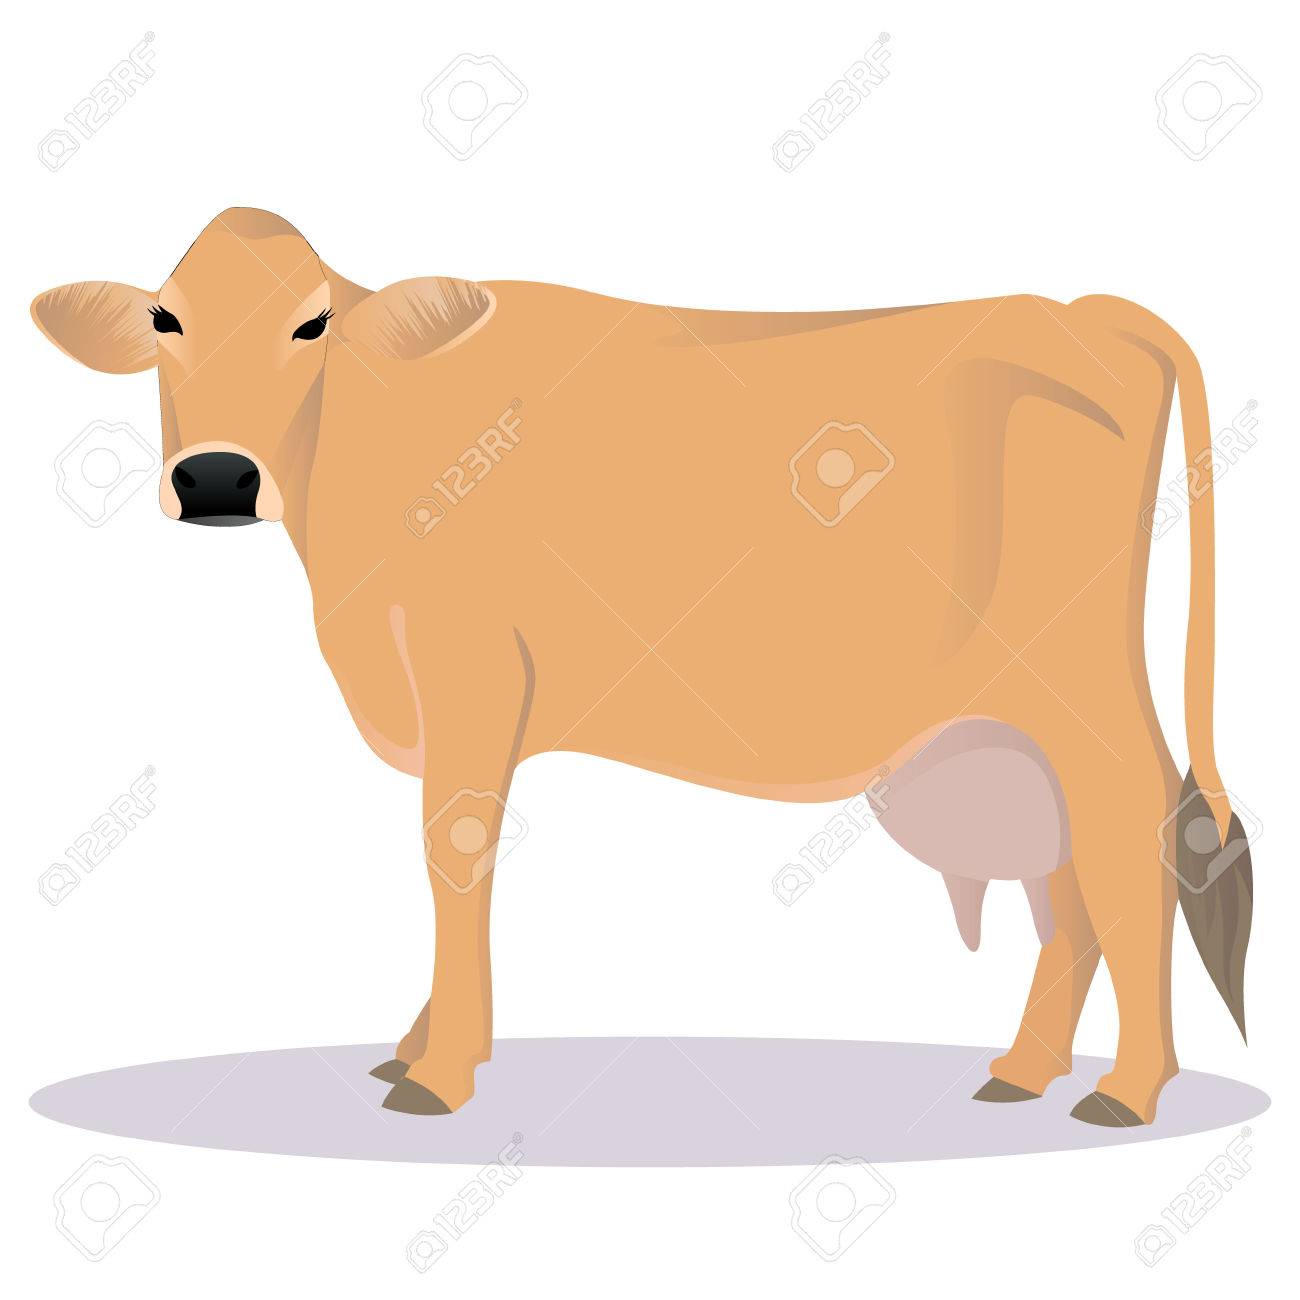 Jersey cattle vector illustration.